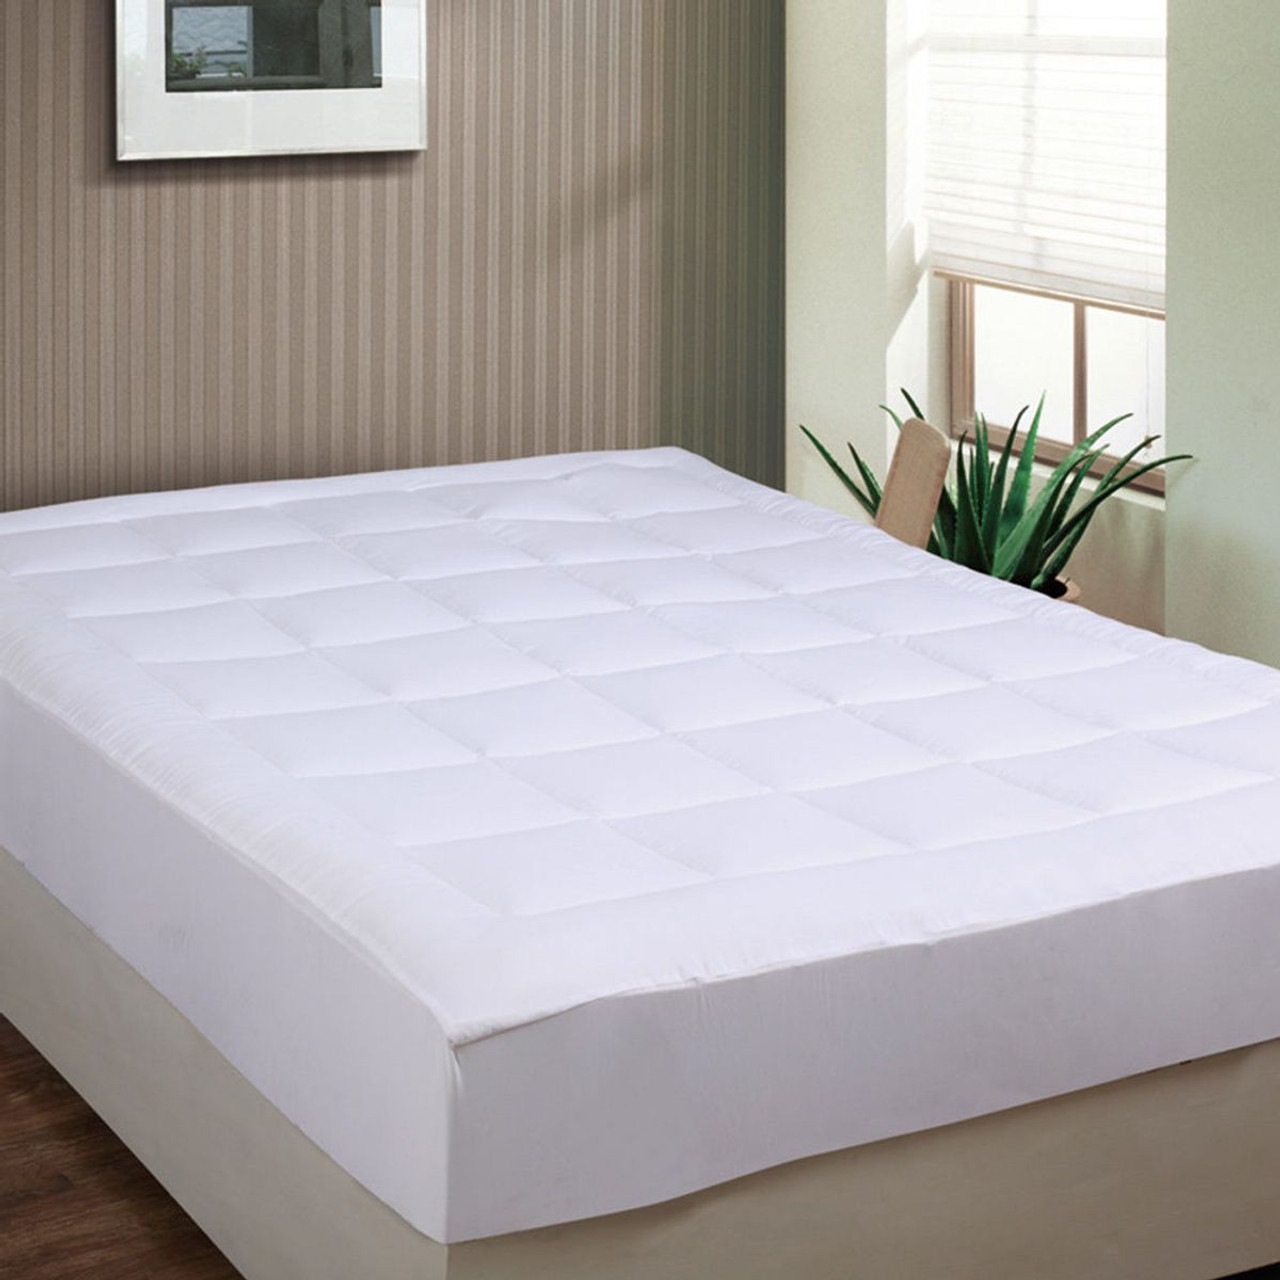 Luxurious Microplush Pillow Mattress Pad Topper product image